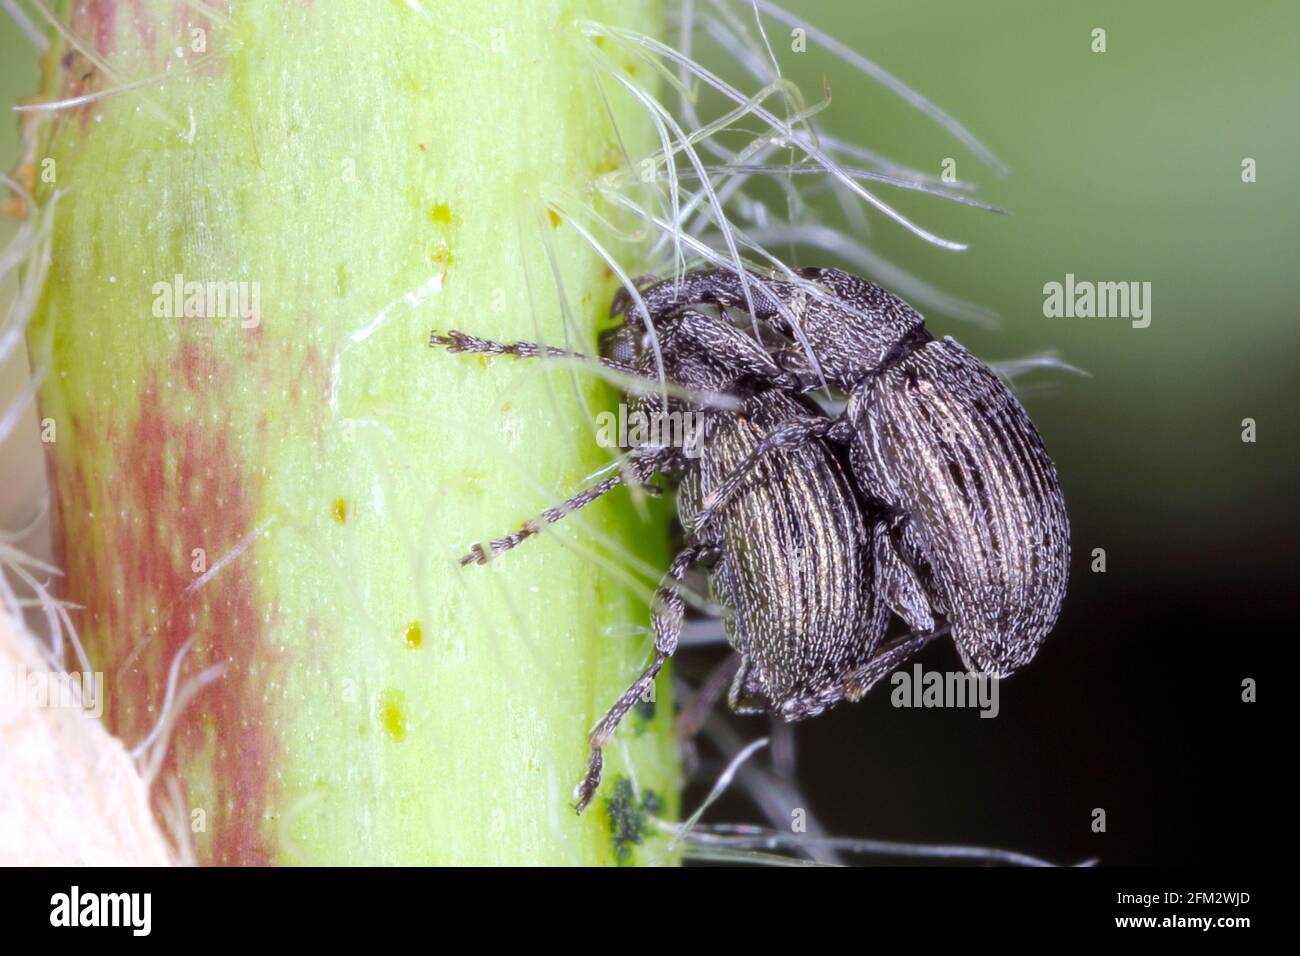 Aspidapion radiolus on hollyhock plant. It is beetle from family Apionidae, pest of hollyhock. Stock Photo